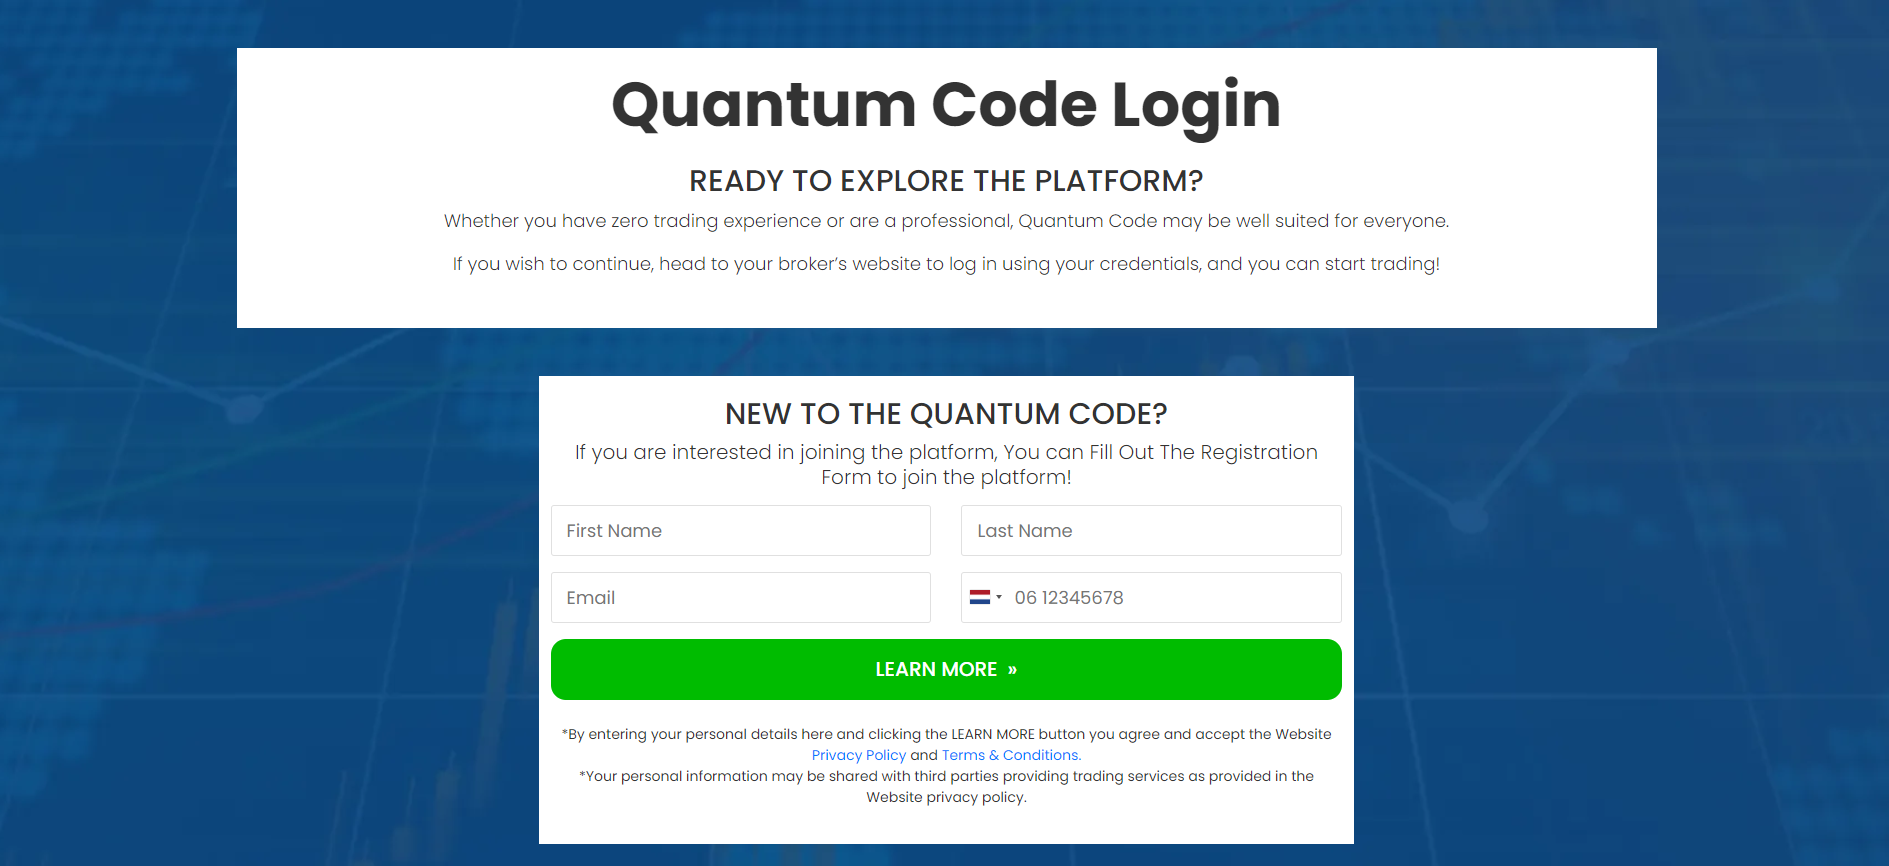 Quantum Code login